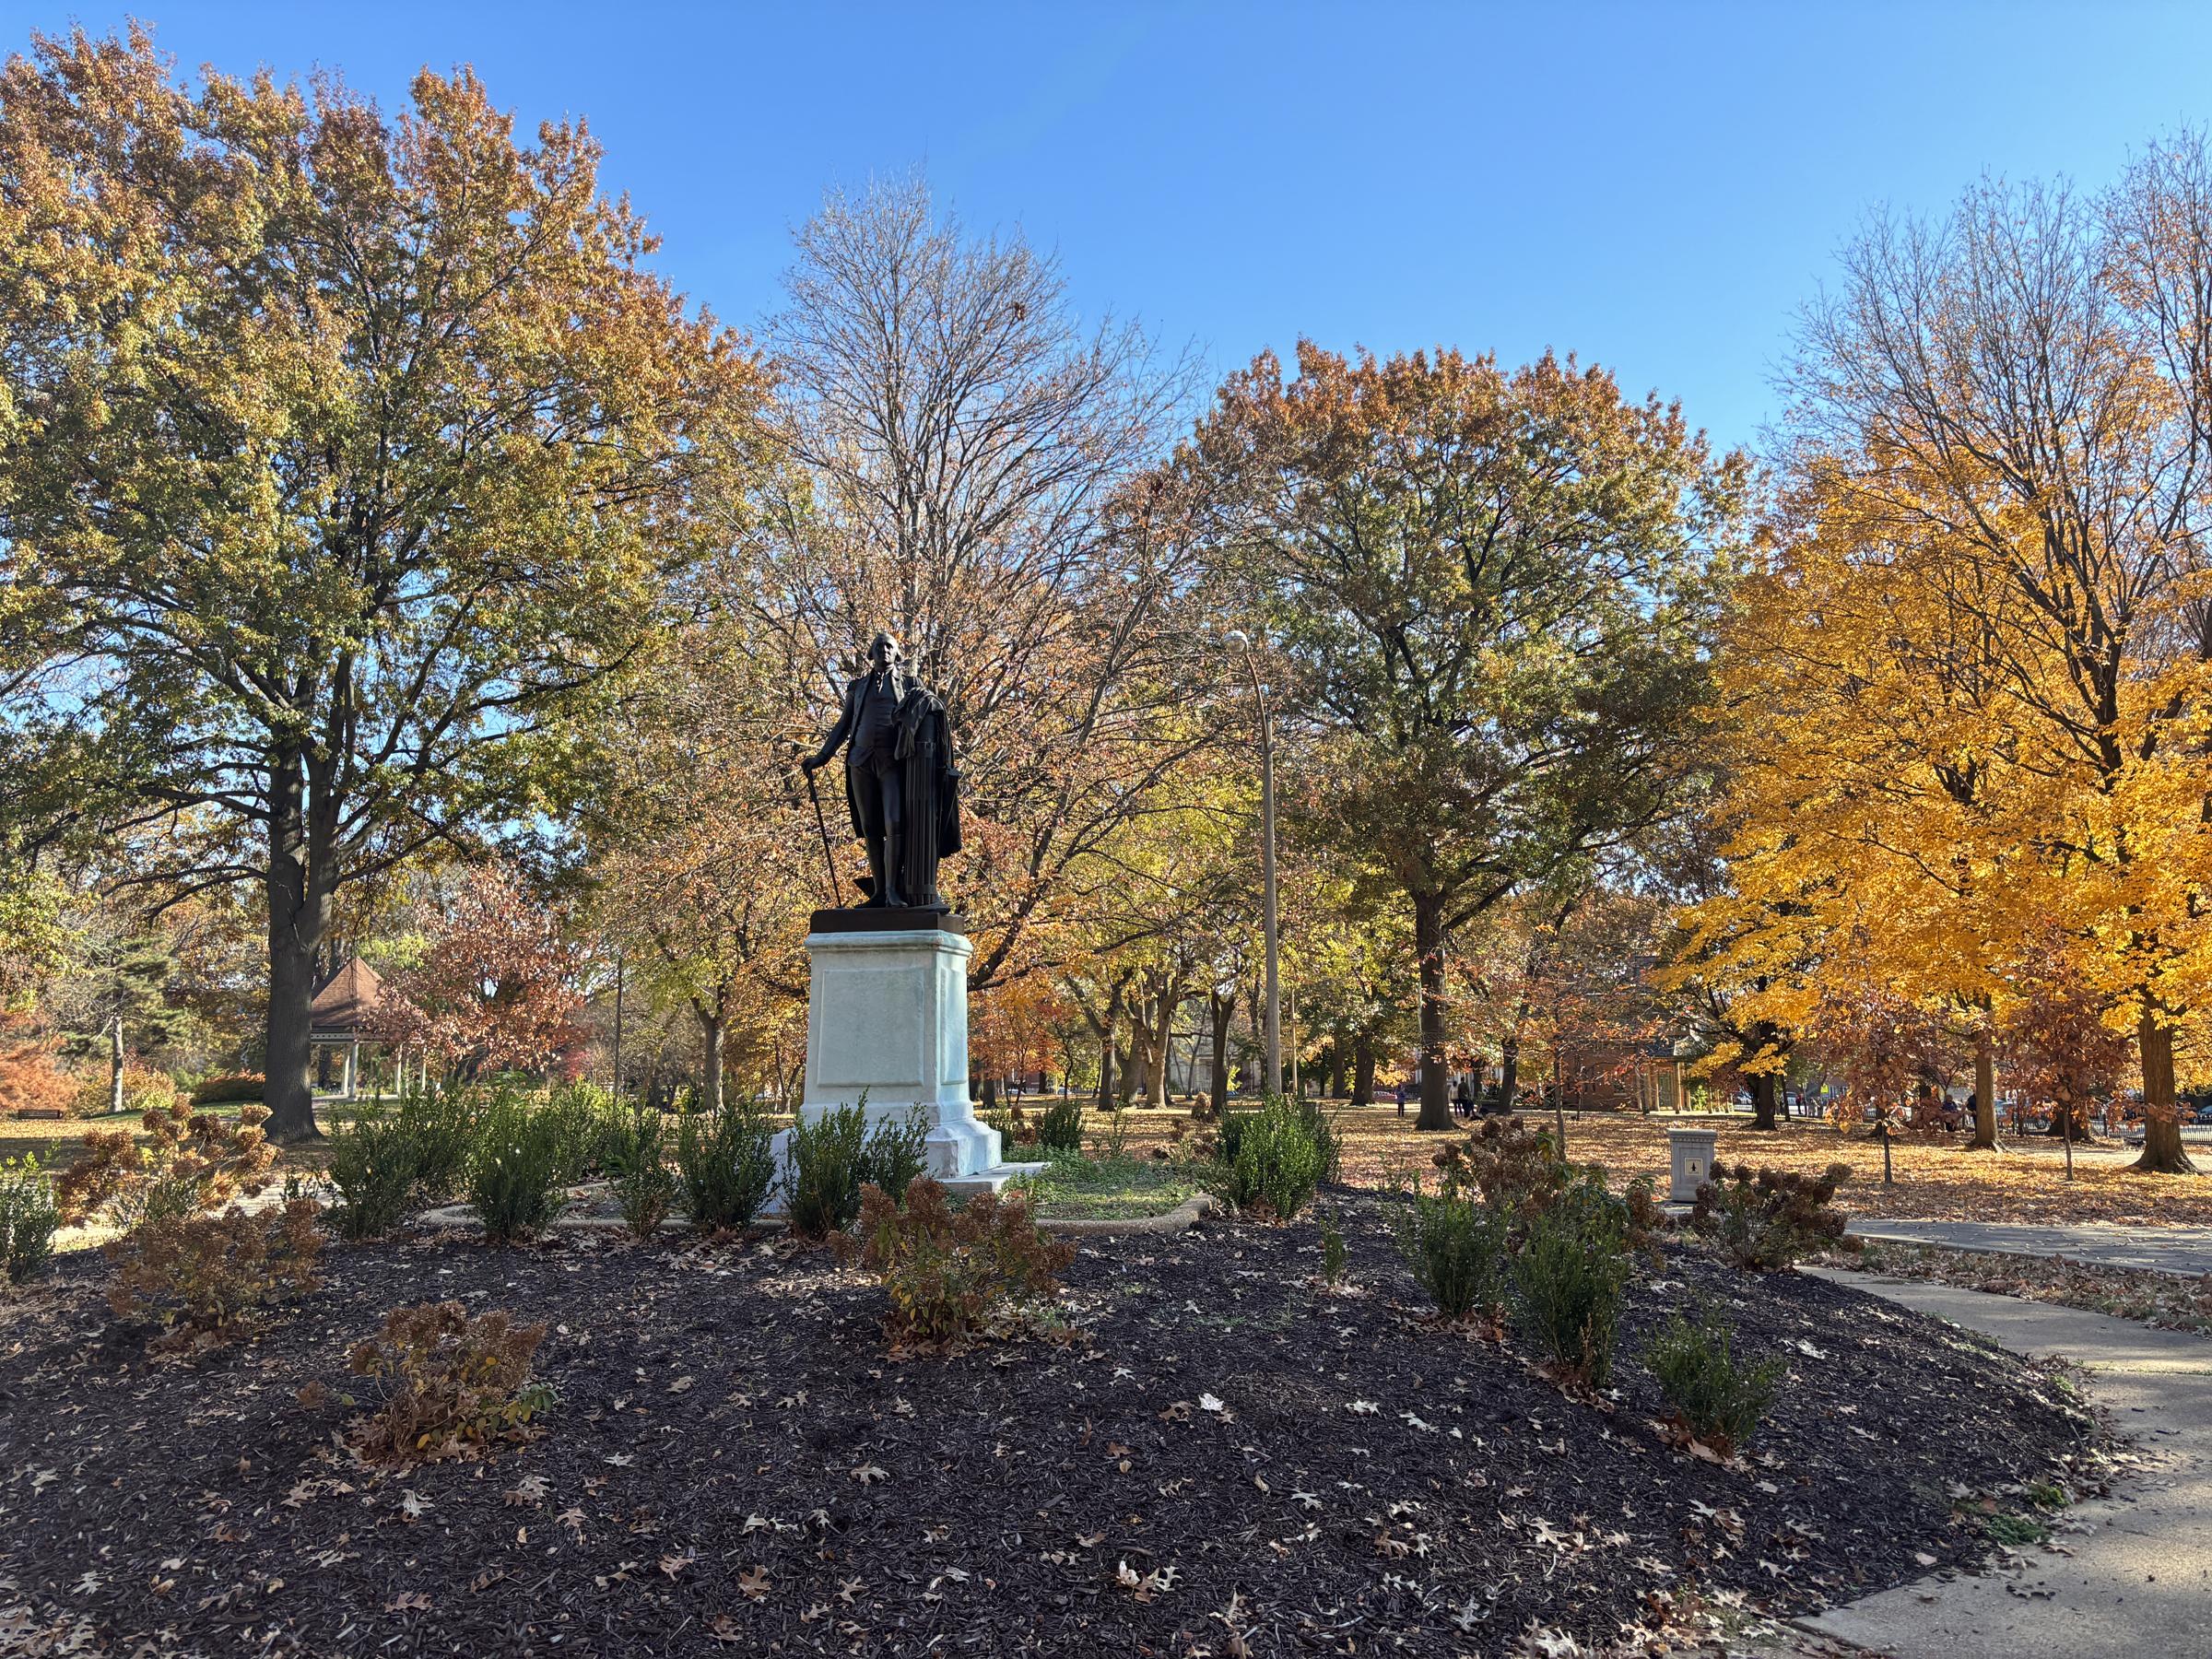 Lafayette Park statue